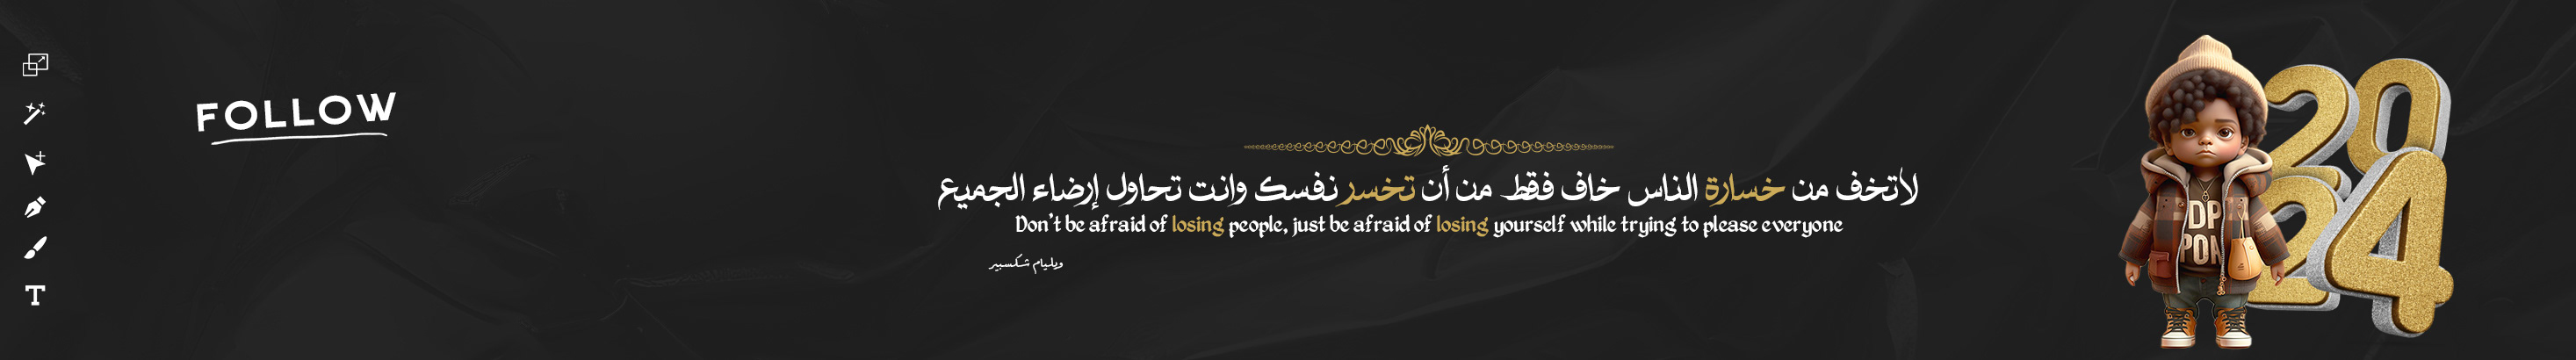 Mohamad Ibrahim's profile banner